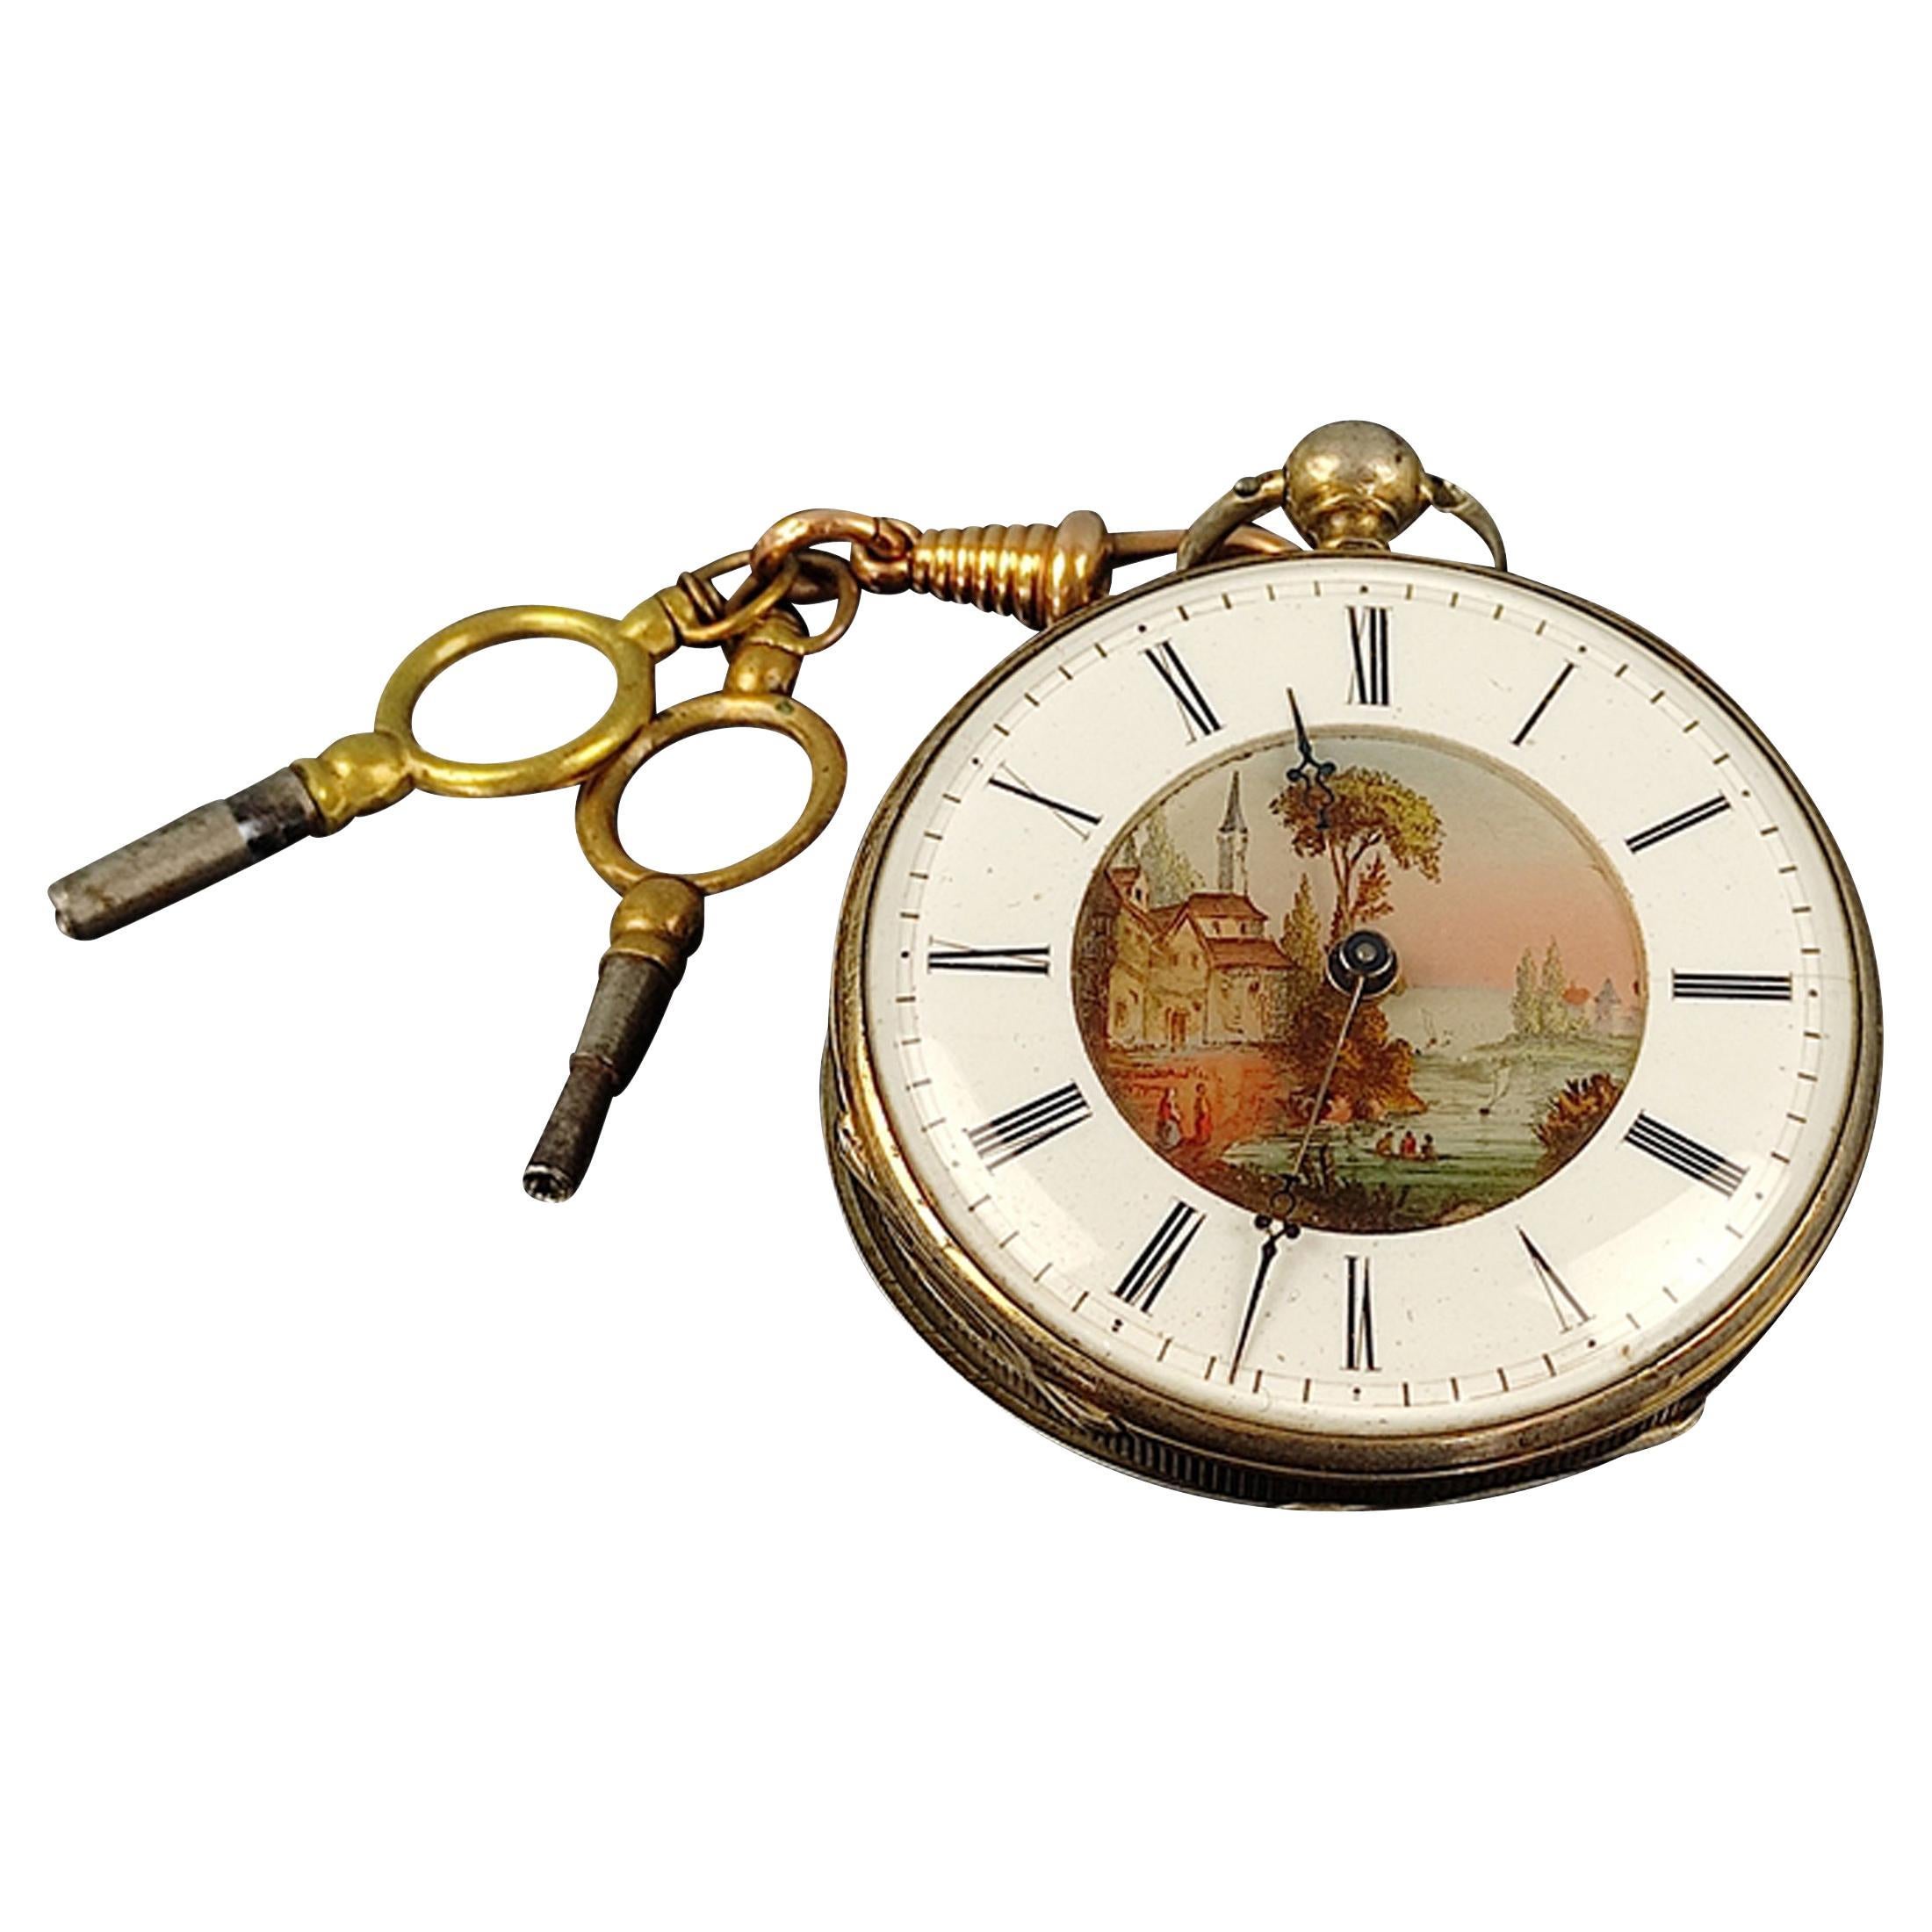 1800s watch